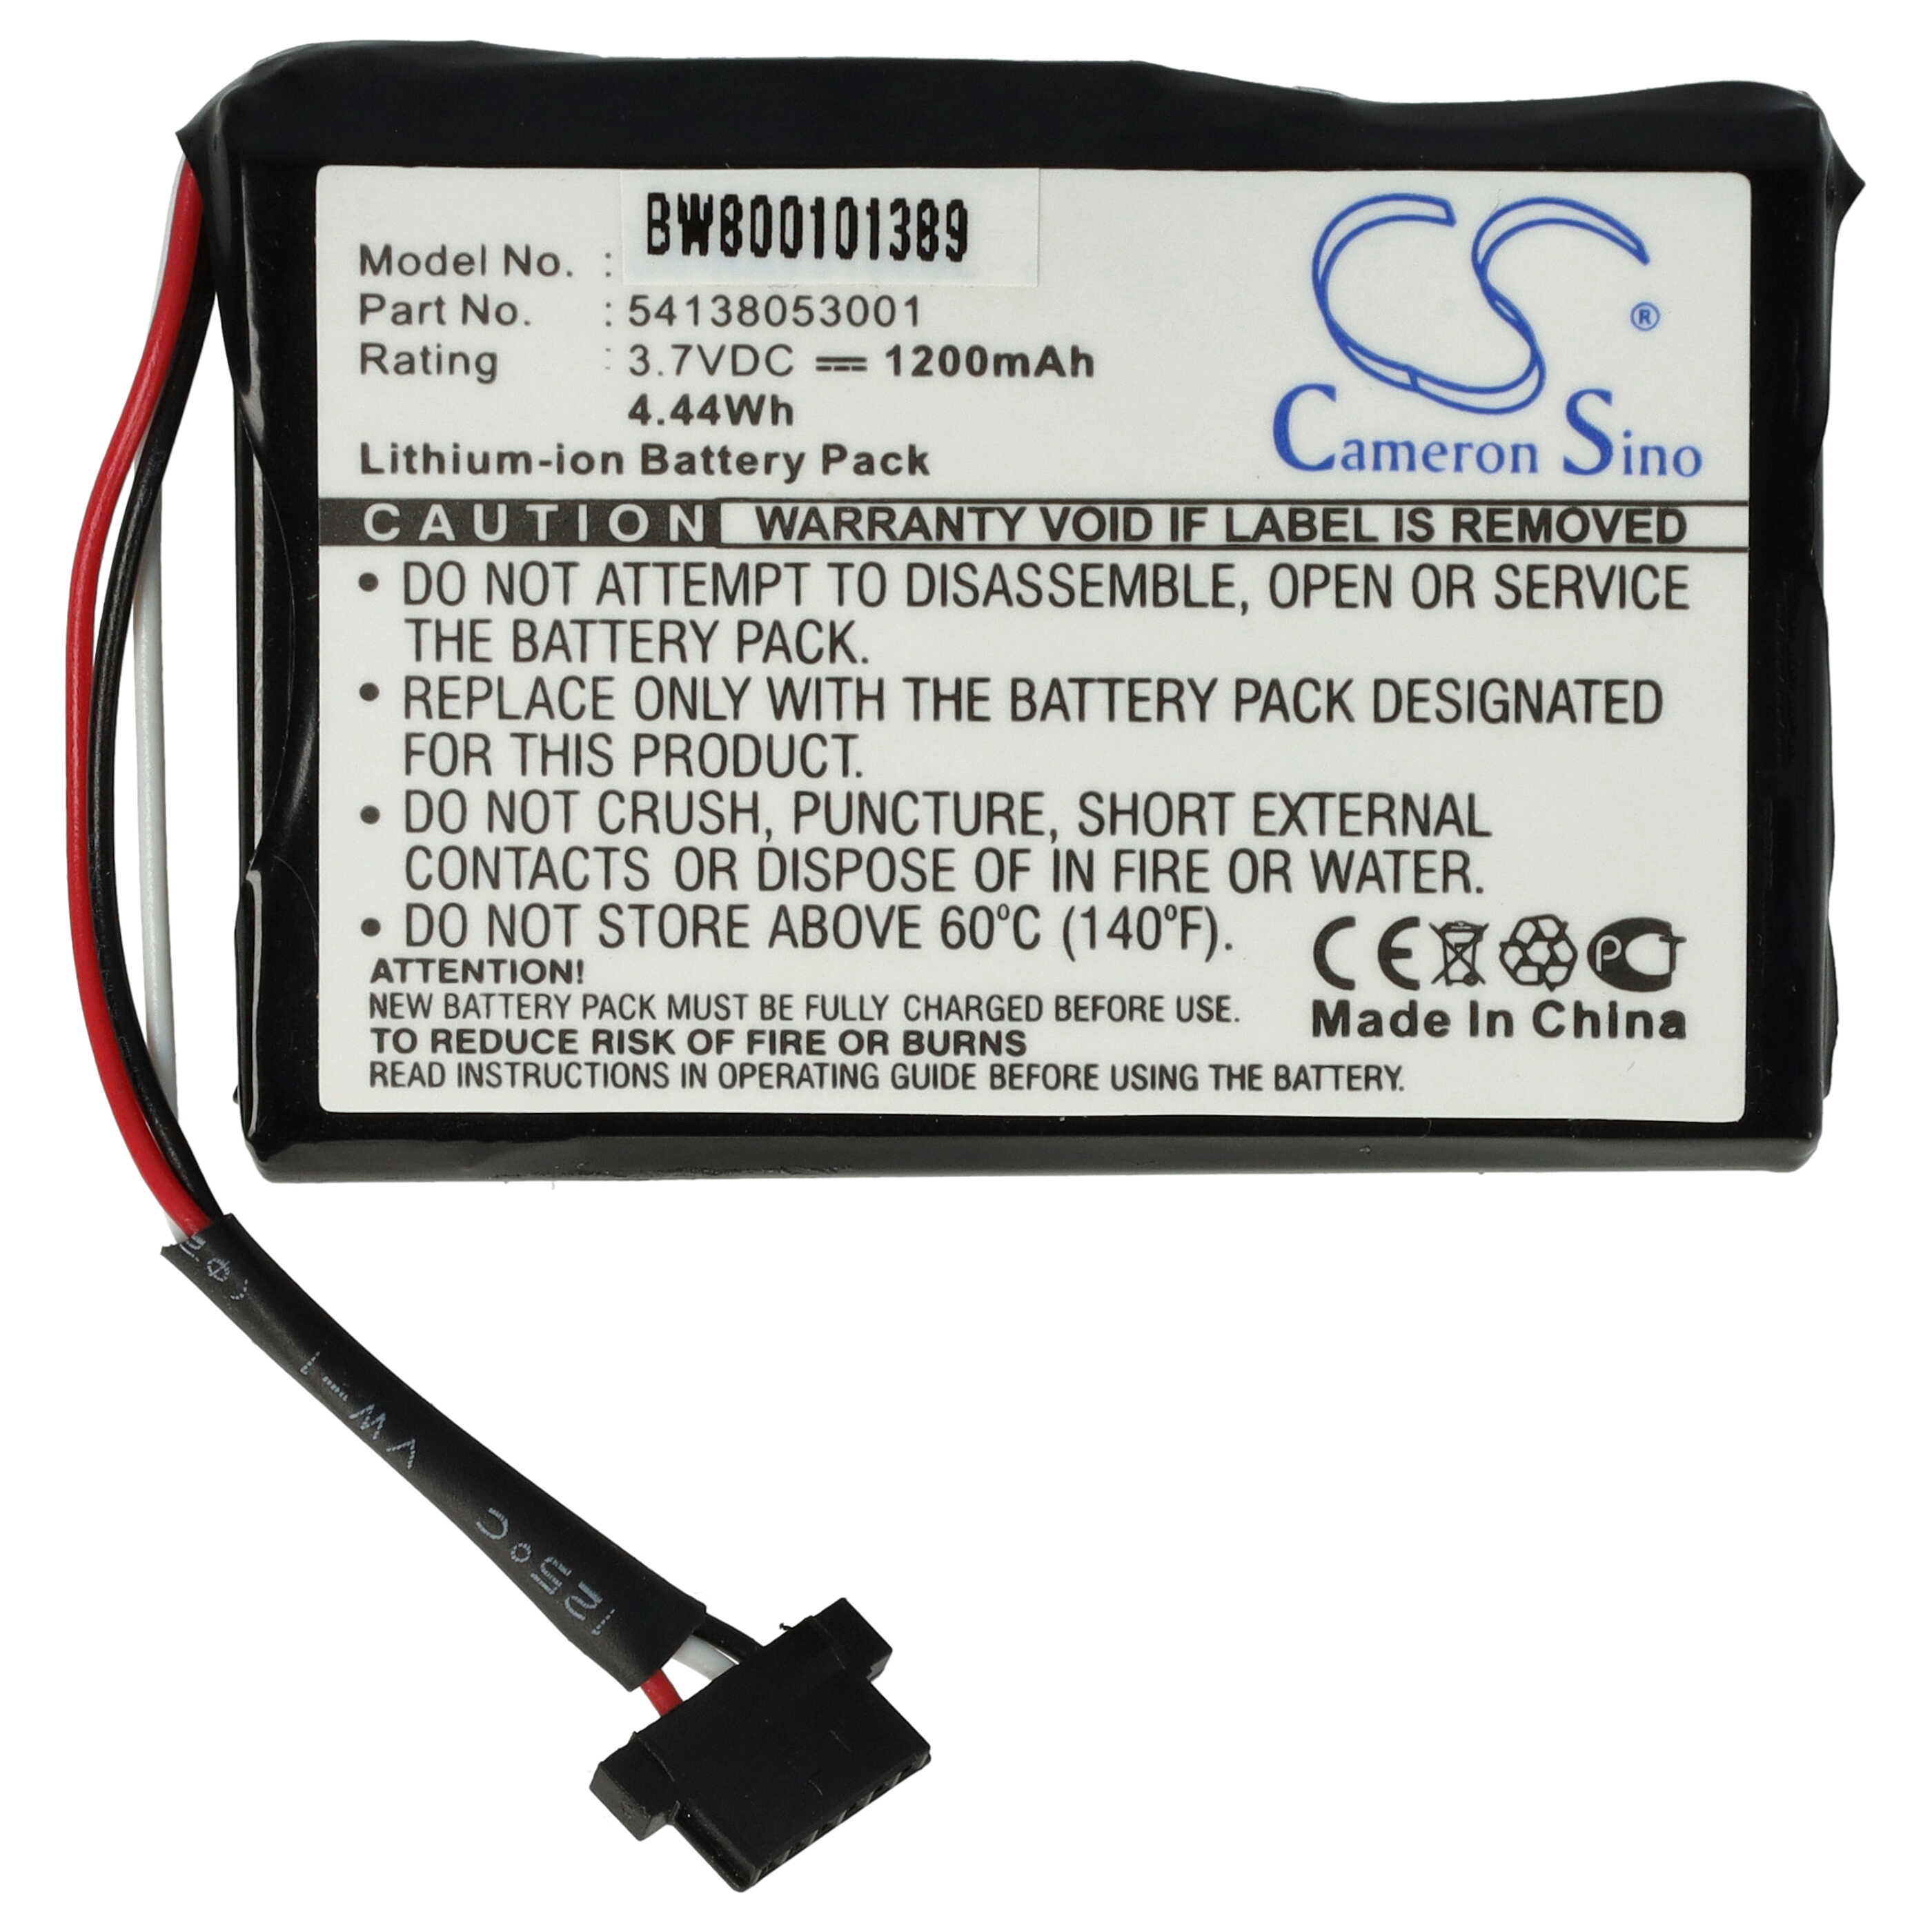 Batterie remplace Navigon 541380530001 pour navigation GPS - 1200mAh 3,7V Li-ion